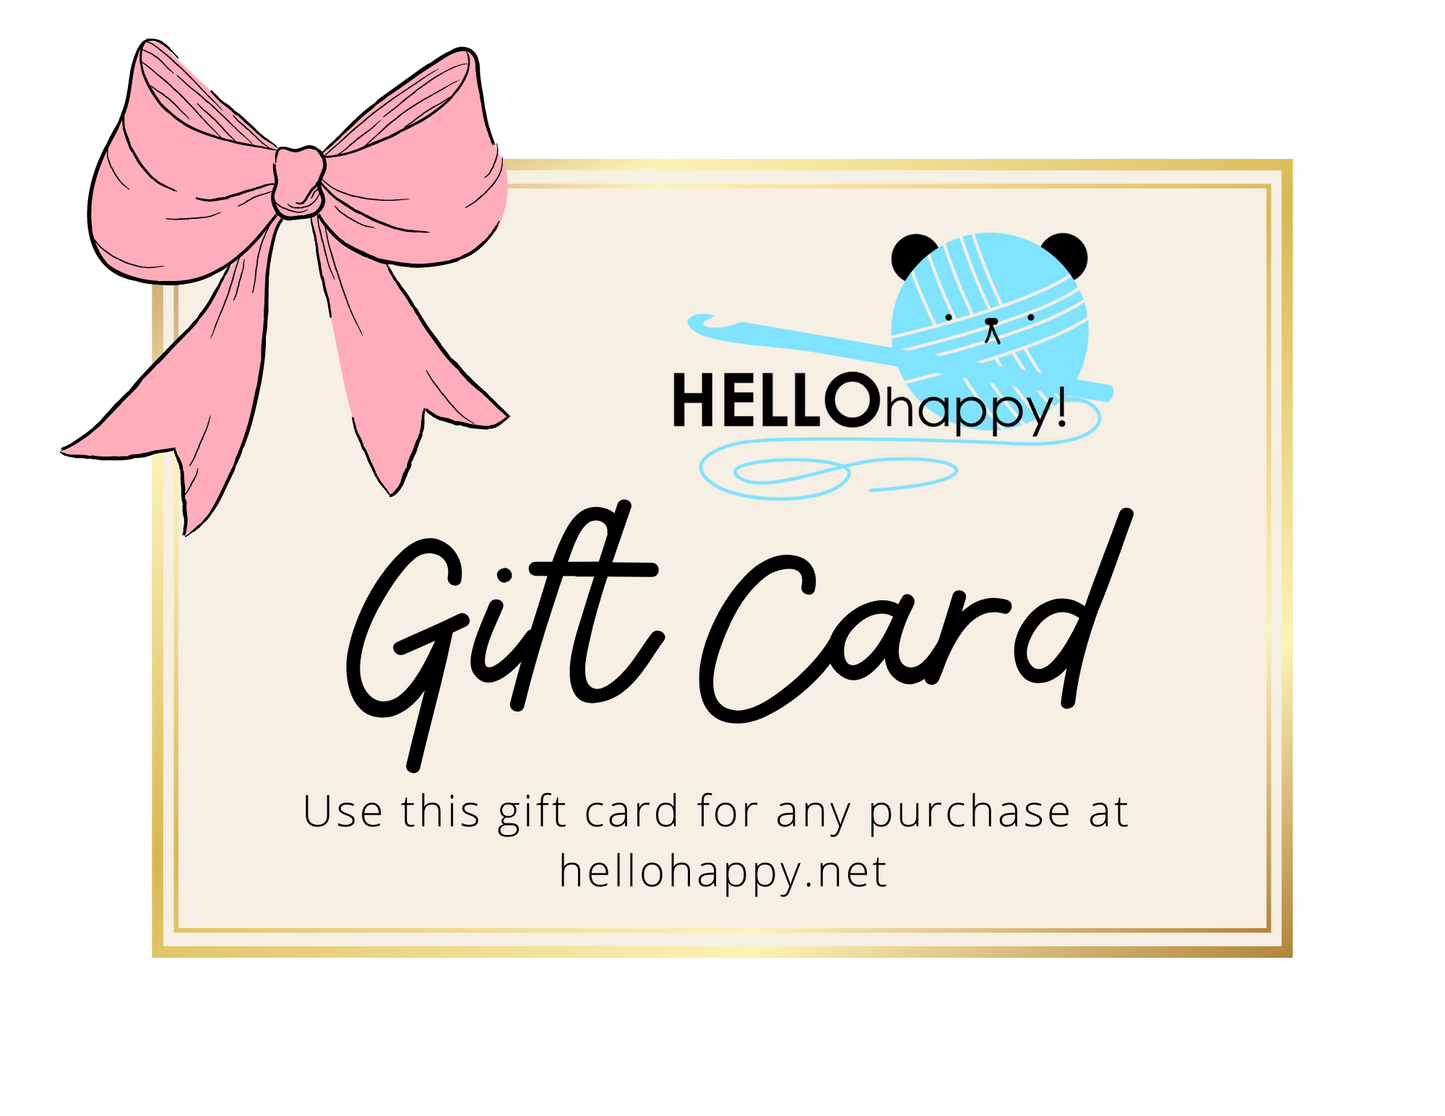 HELLOhappy Gift Card